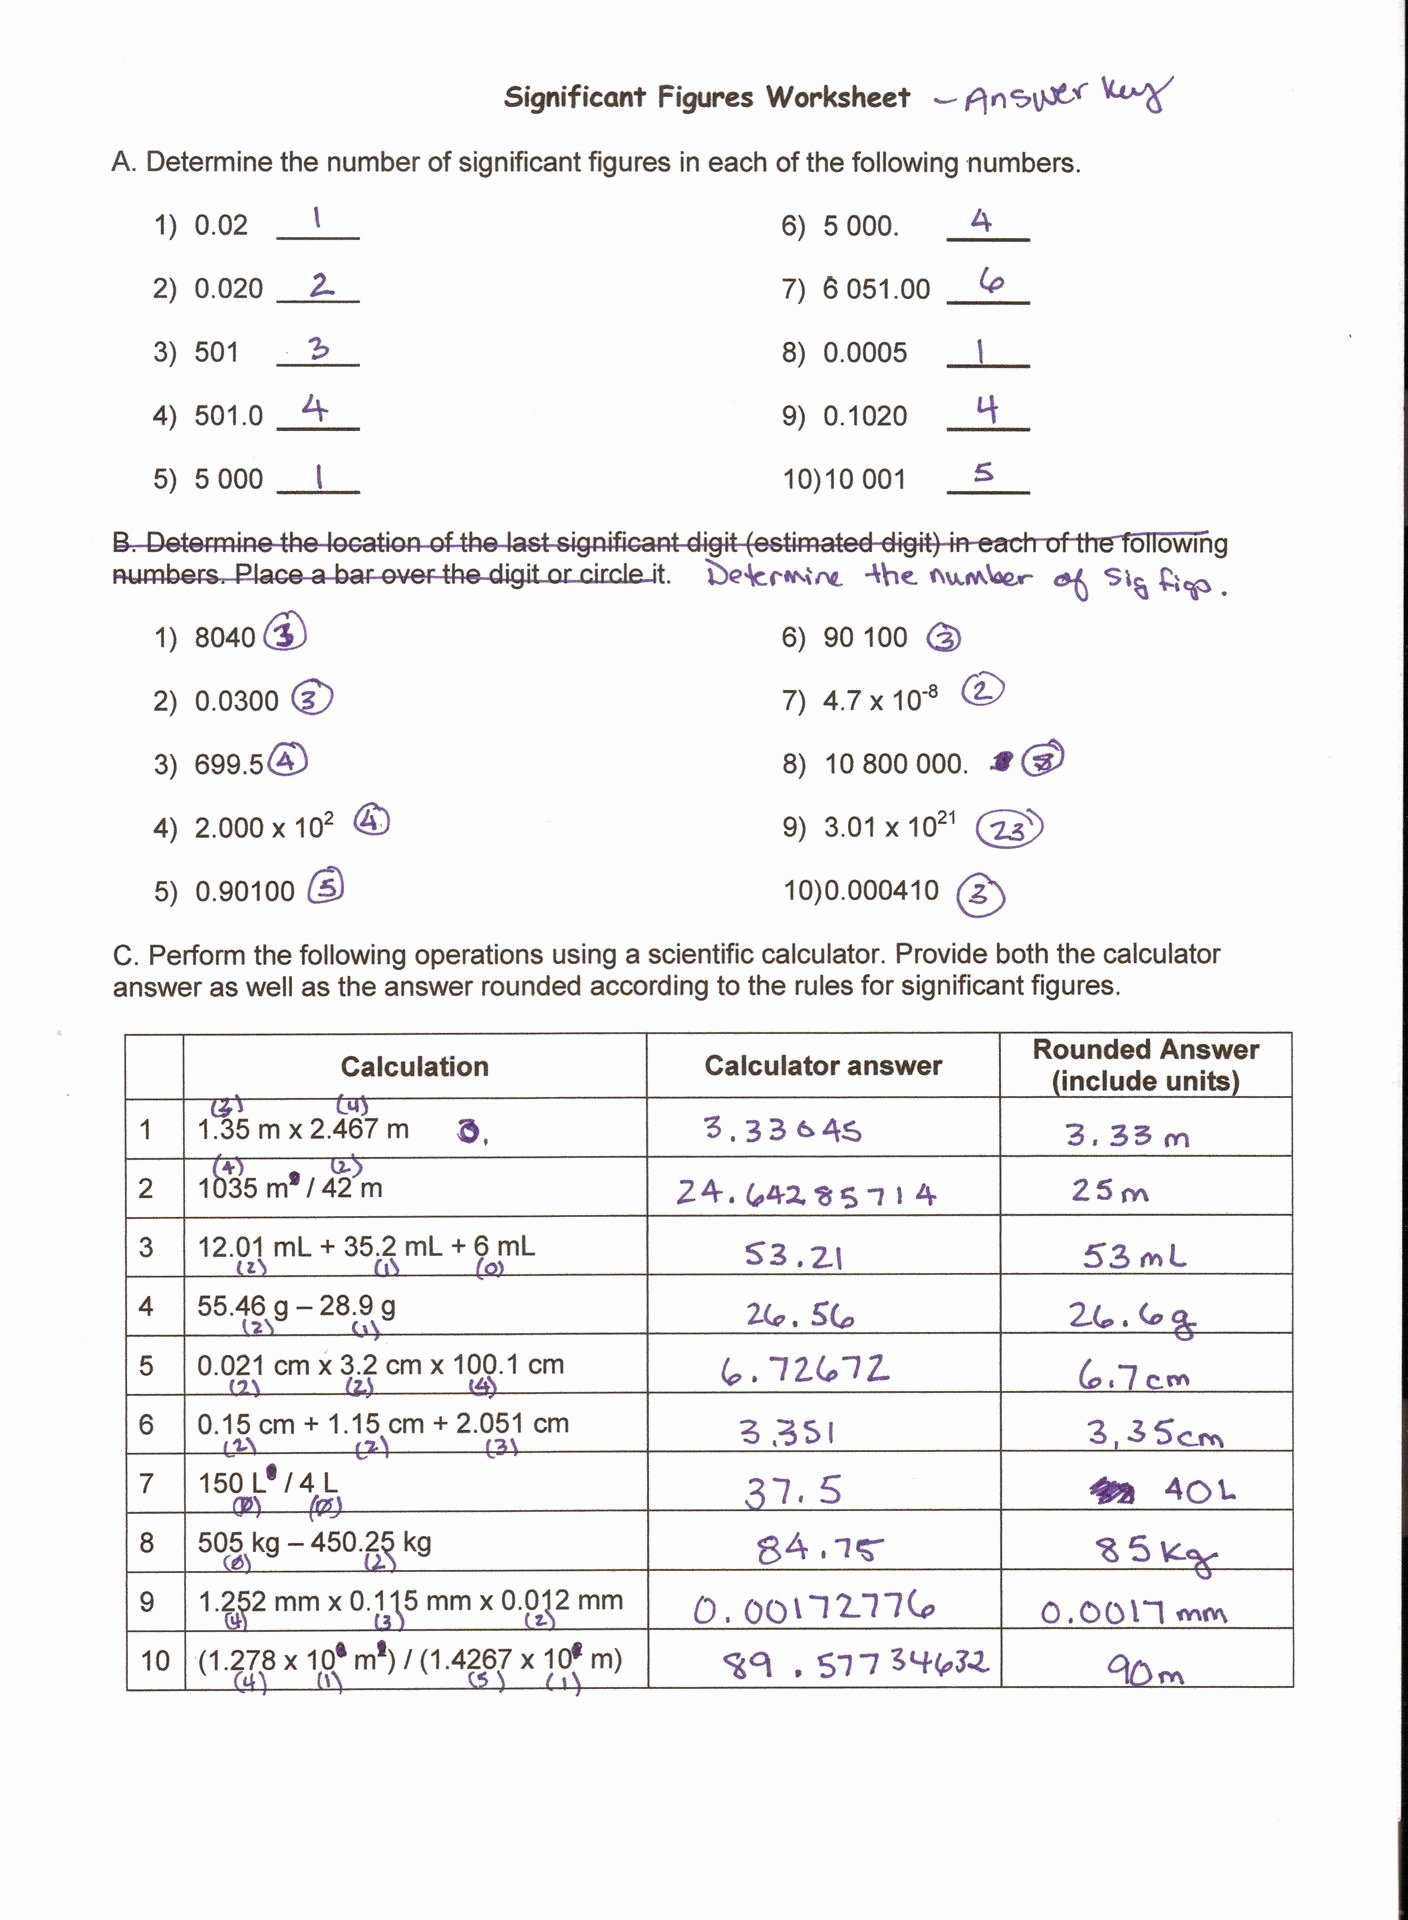 45 Metrics And Measurement Worksheet Answers